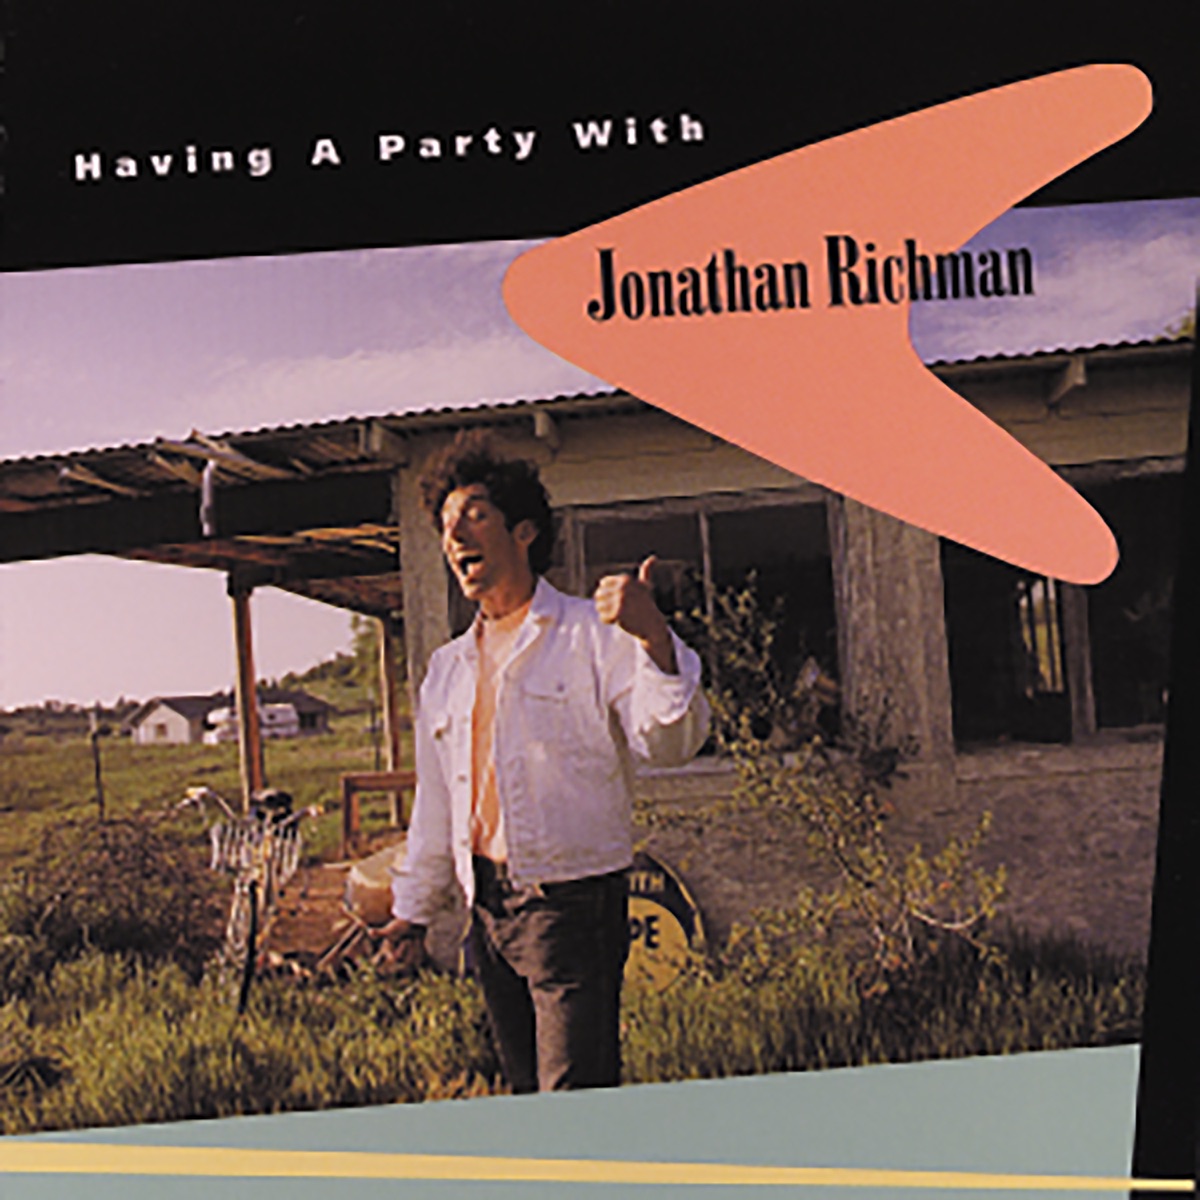 Jonathan, Te Vas a Emocionar! par Jonathan Richman sur Apple Music